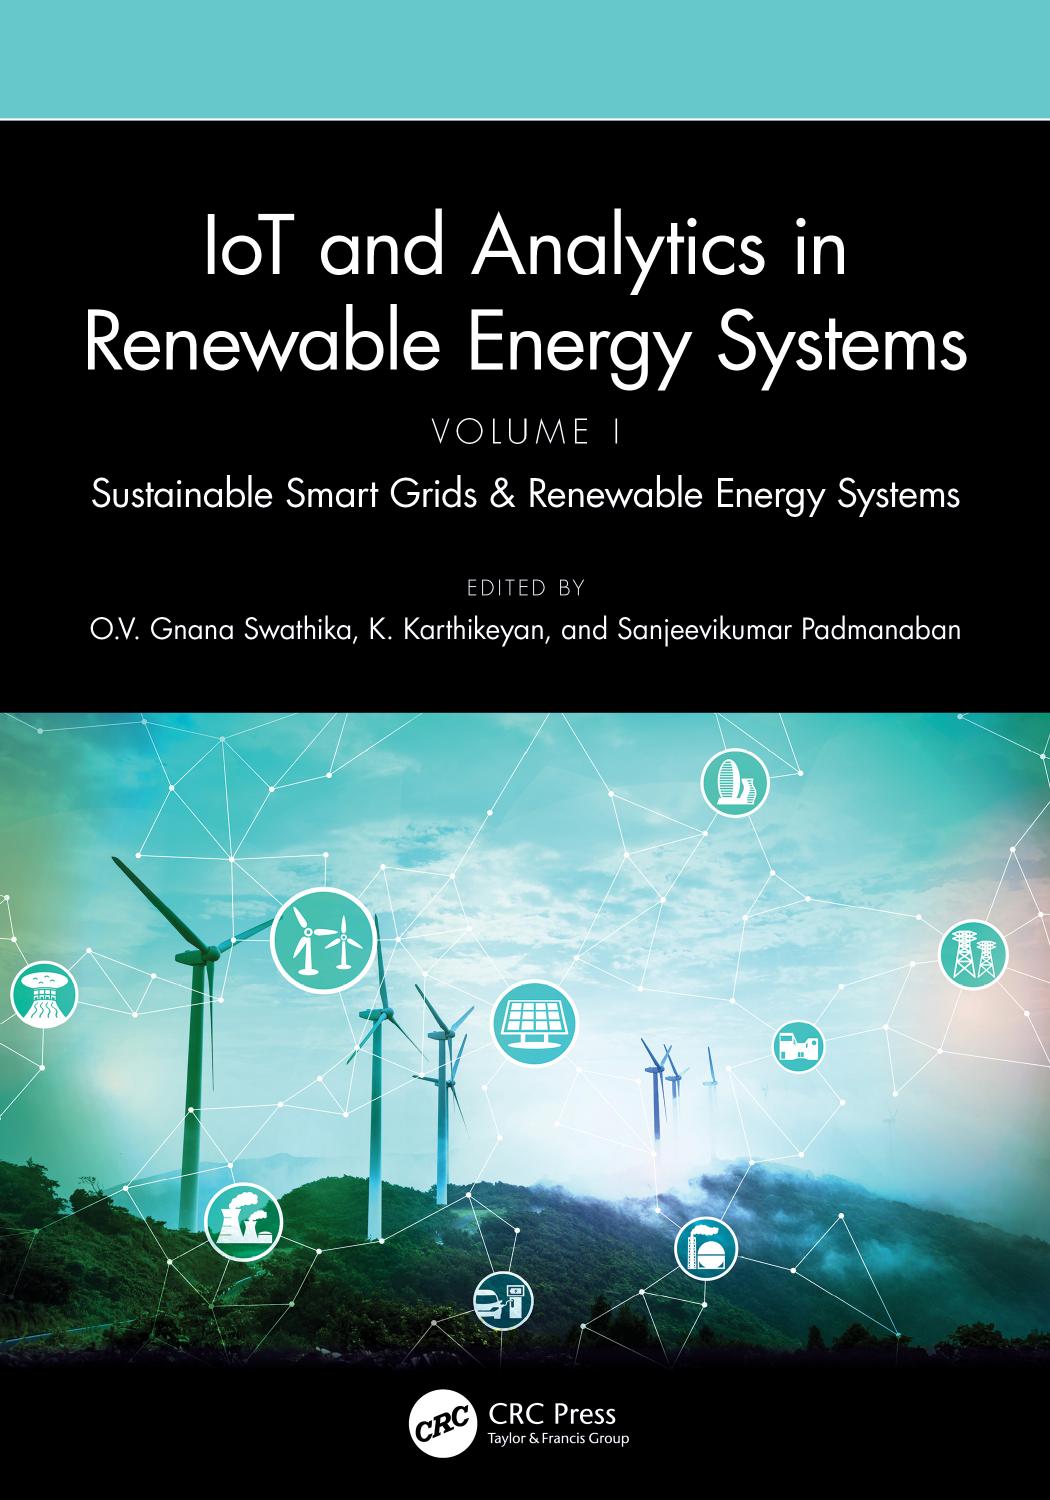 IoT and Analytics in Renewable Energy Systems, Volume I: Sustainable Smart Grids & Renewable Energy Systems by O. V. Gnana Swathika K. Karthikeyan Sanjeevikumar Padmanaban